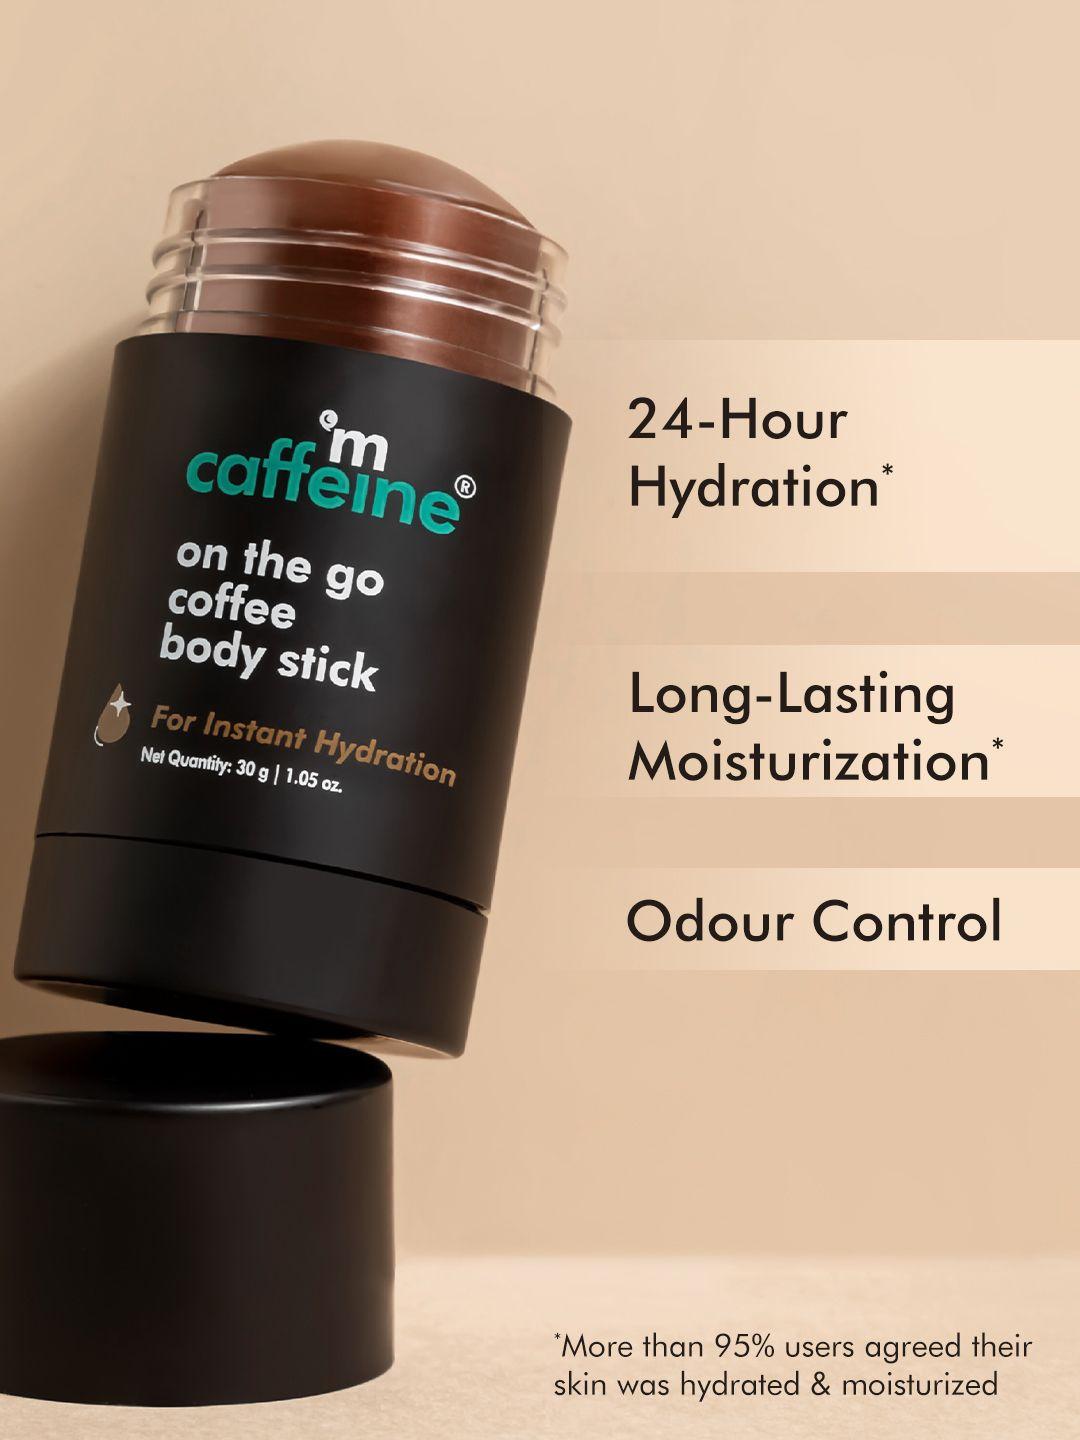 mcaffeine on the go coffee body stick for 24 hr hydration & odor control - 30 g